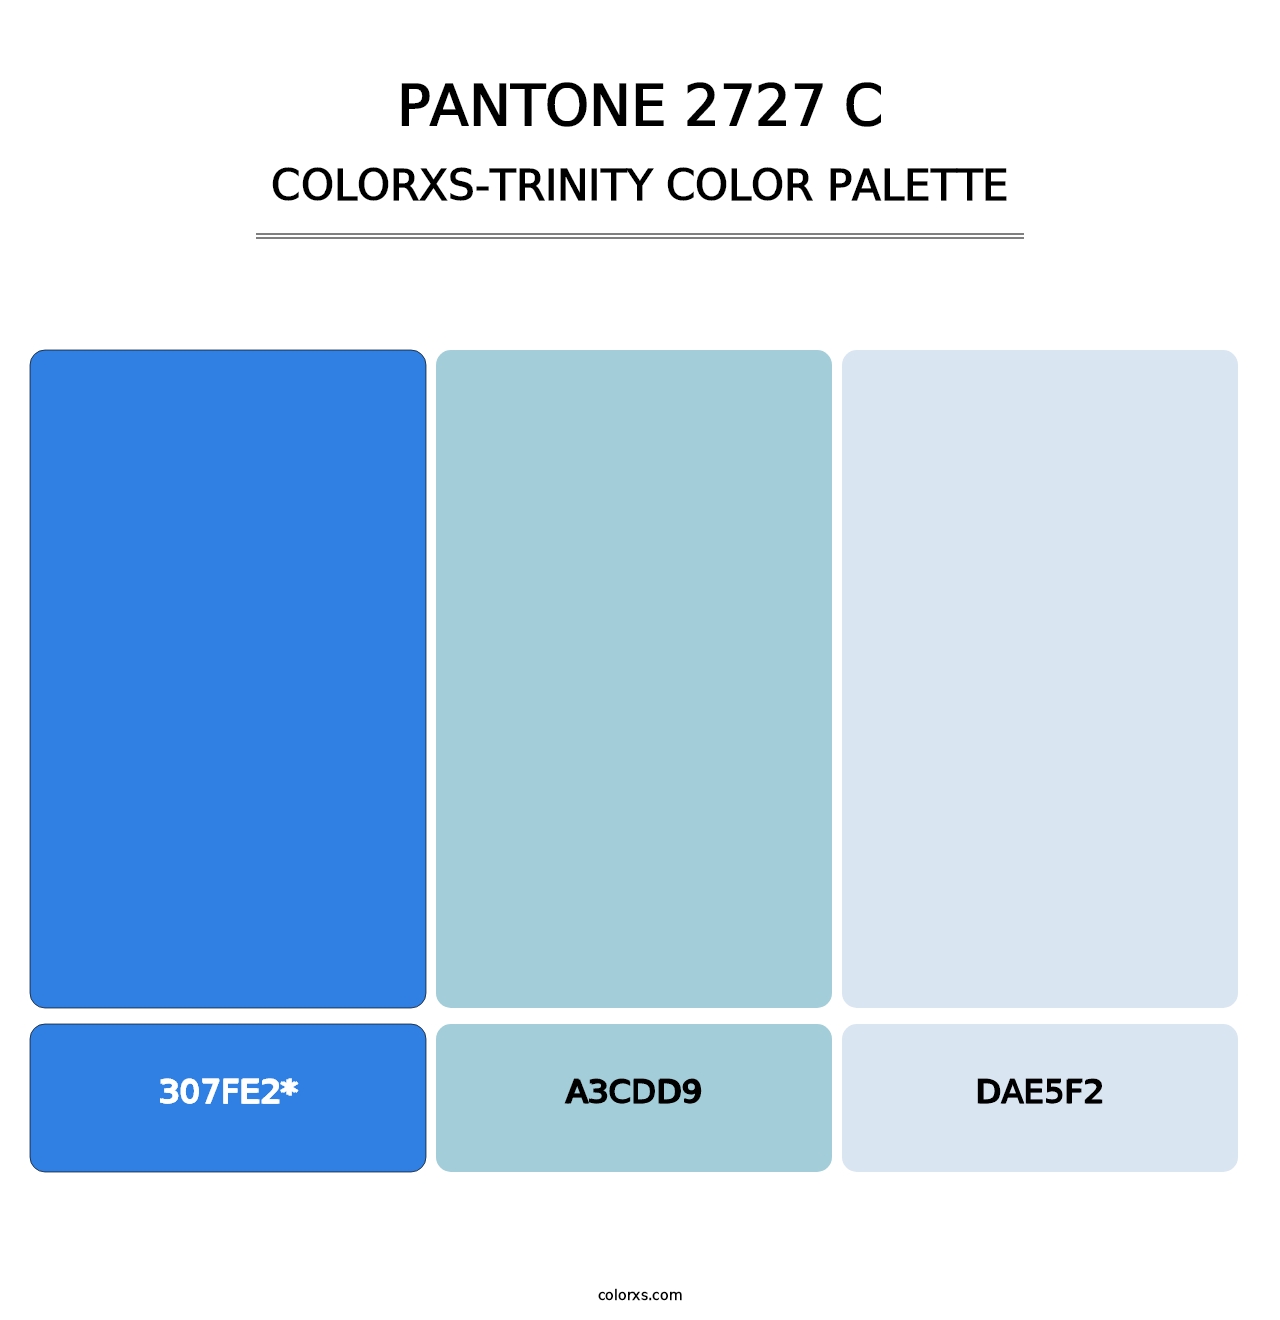 PANTONE 2727 C - Colorxs Trinity Palette